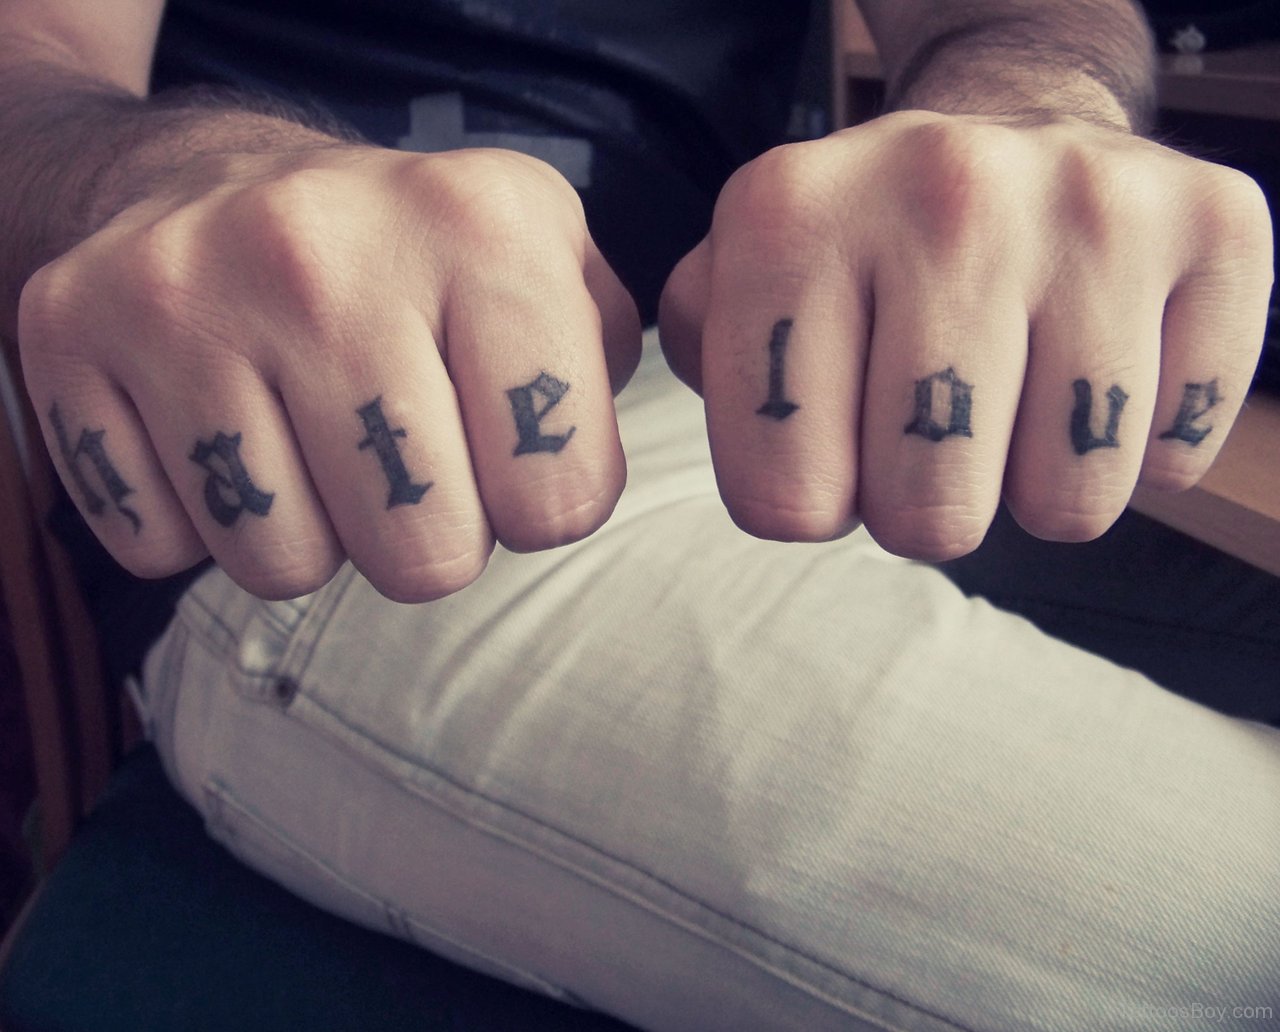 Hate Love Wording Fingers Tattoos